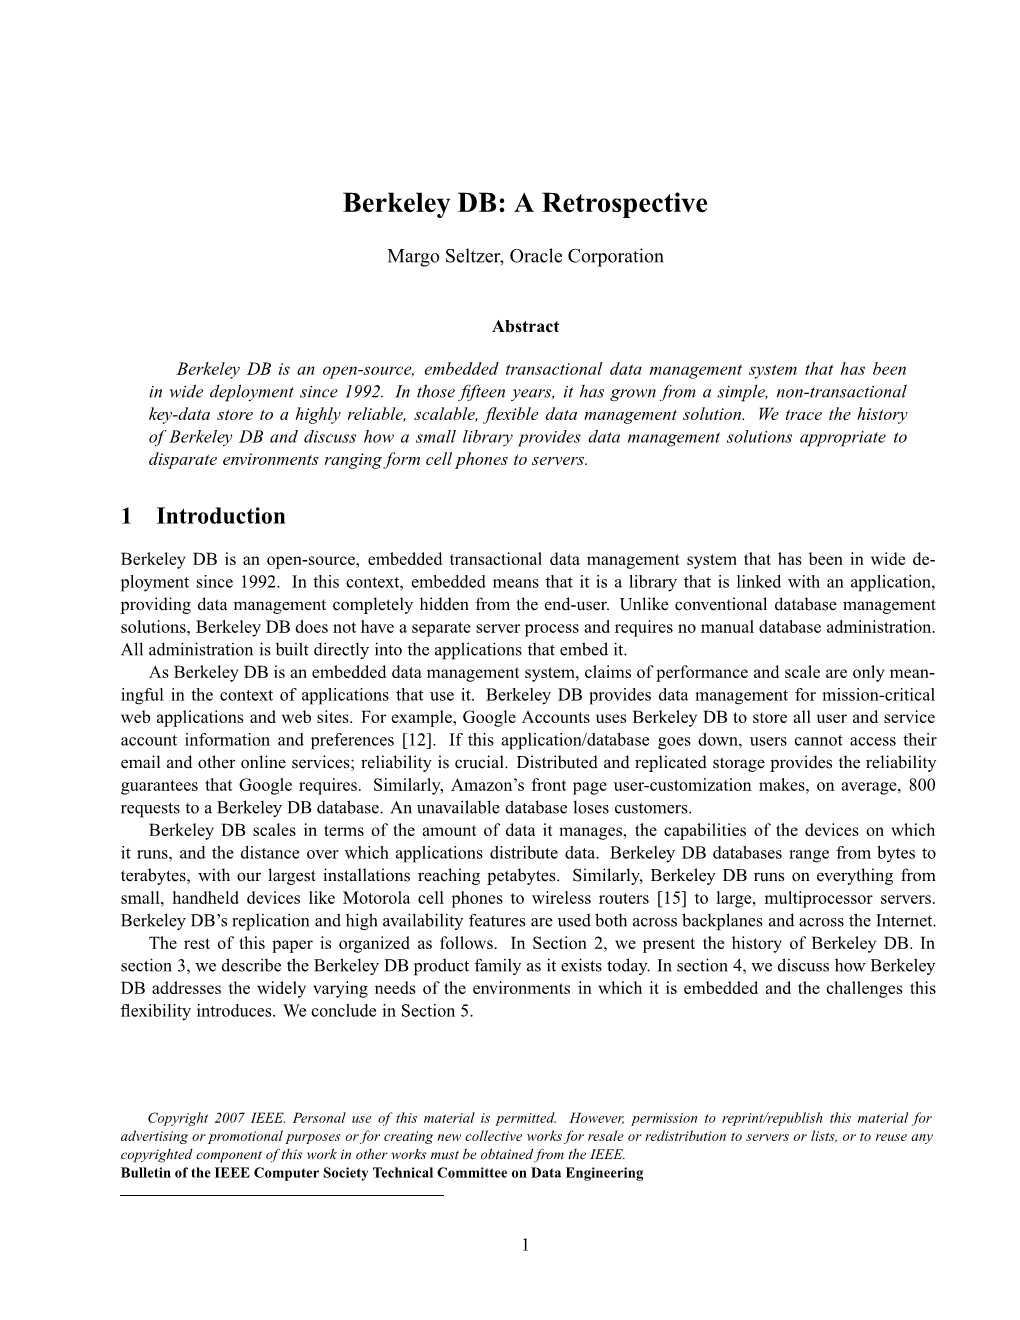 Berkeley DB: a Retrospective